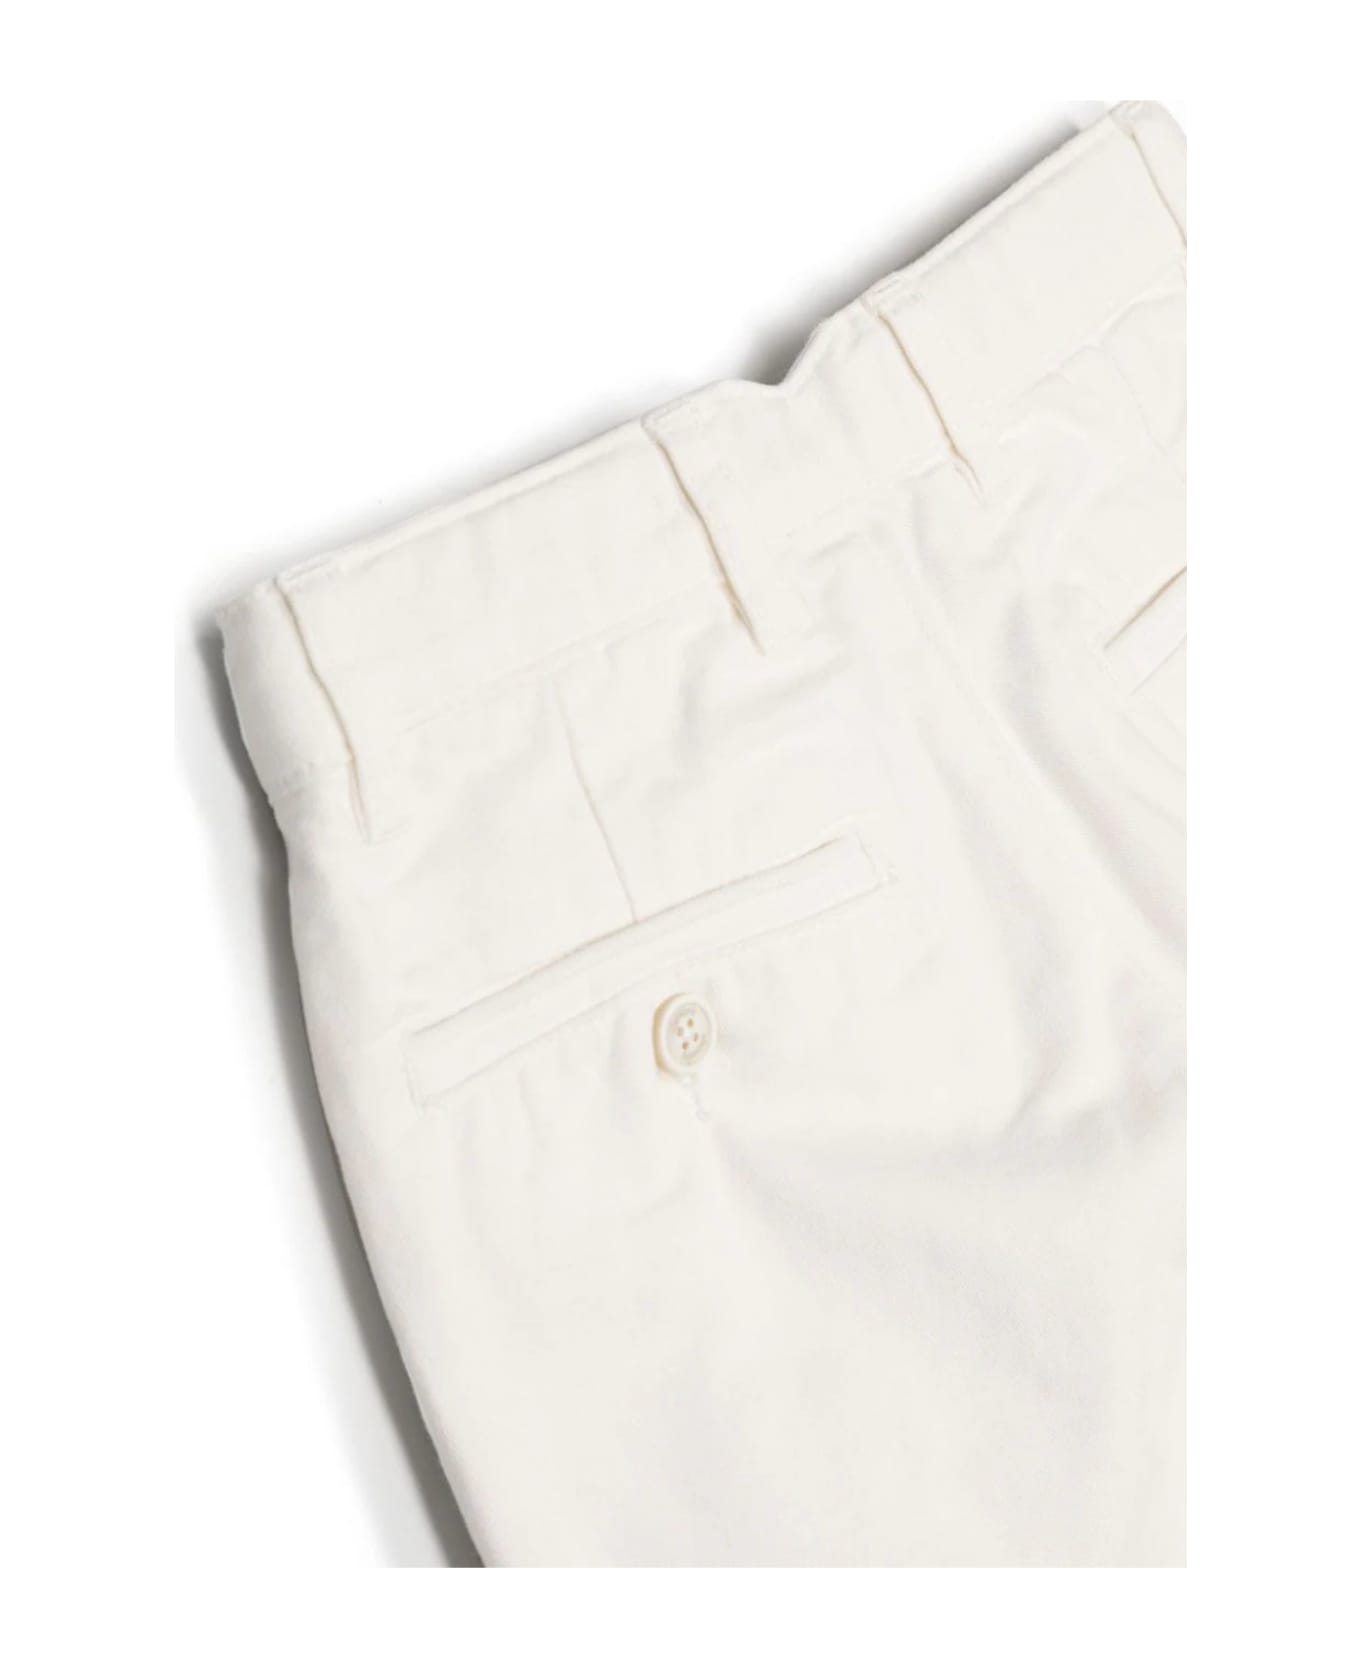 Eleventy Trousers White - White